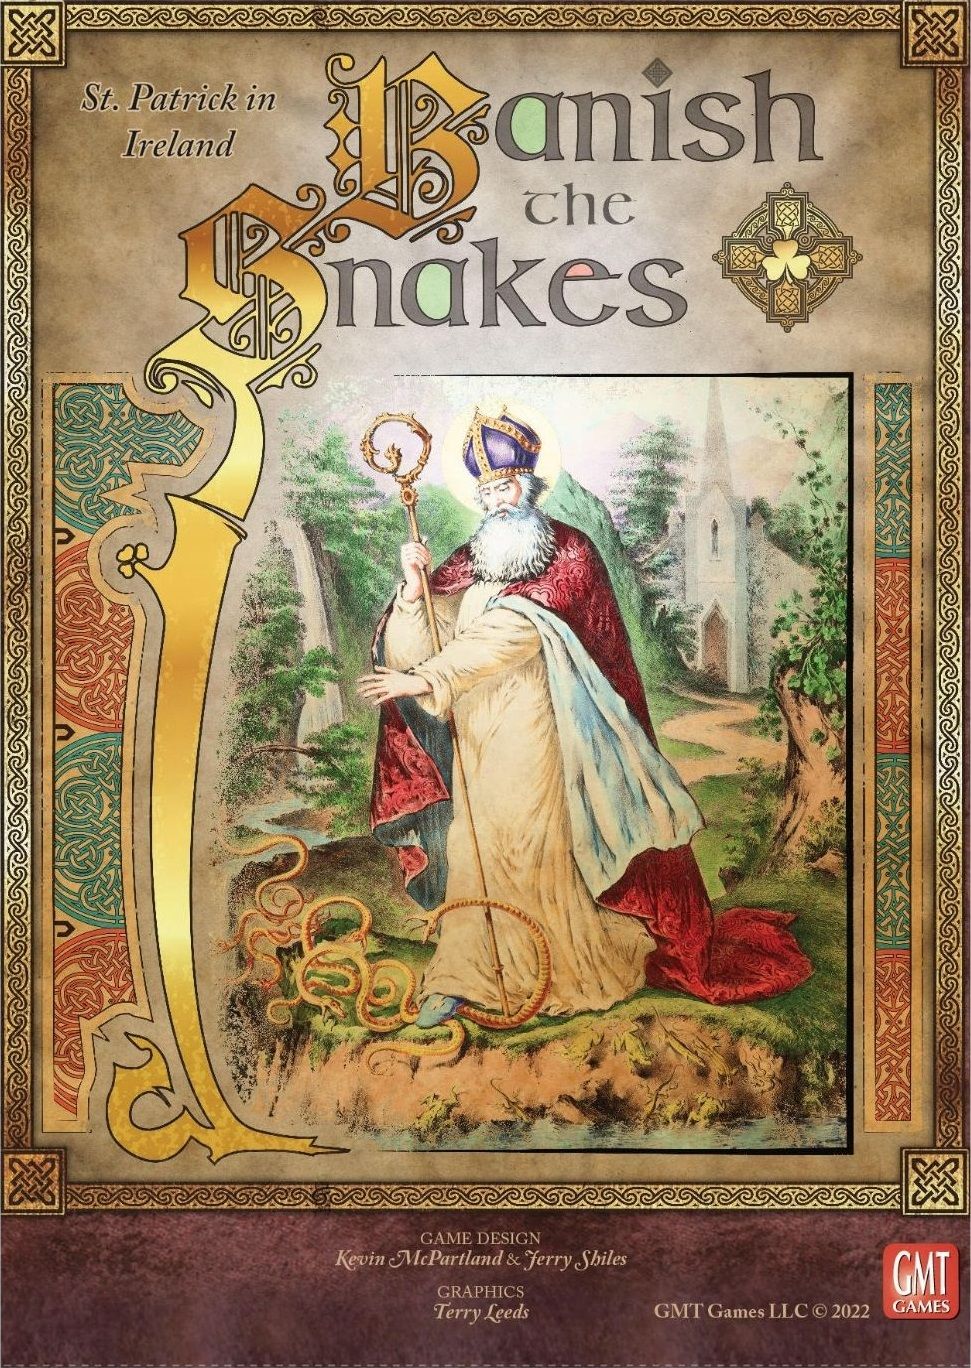 Banish the Snakes: A Game of St. Patrick in Ireland (Bordspellen), GMT Games